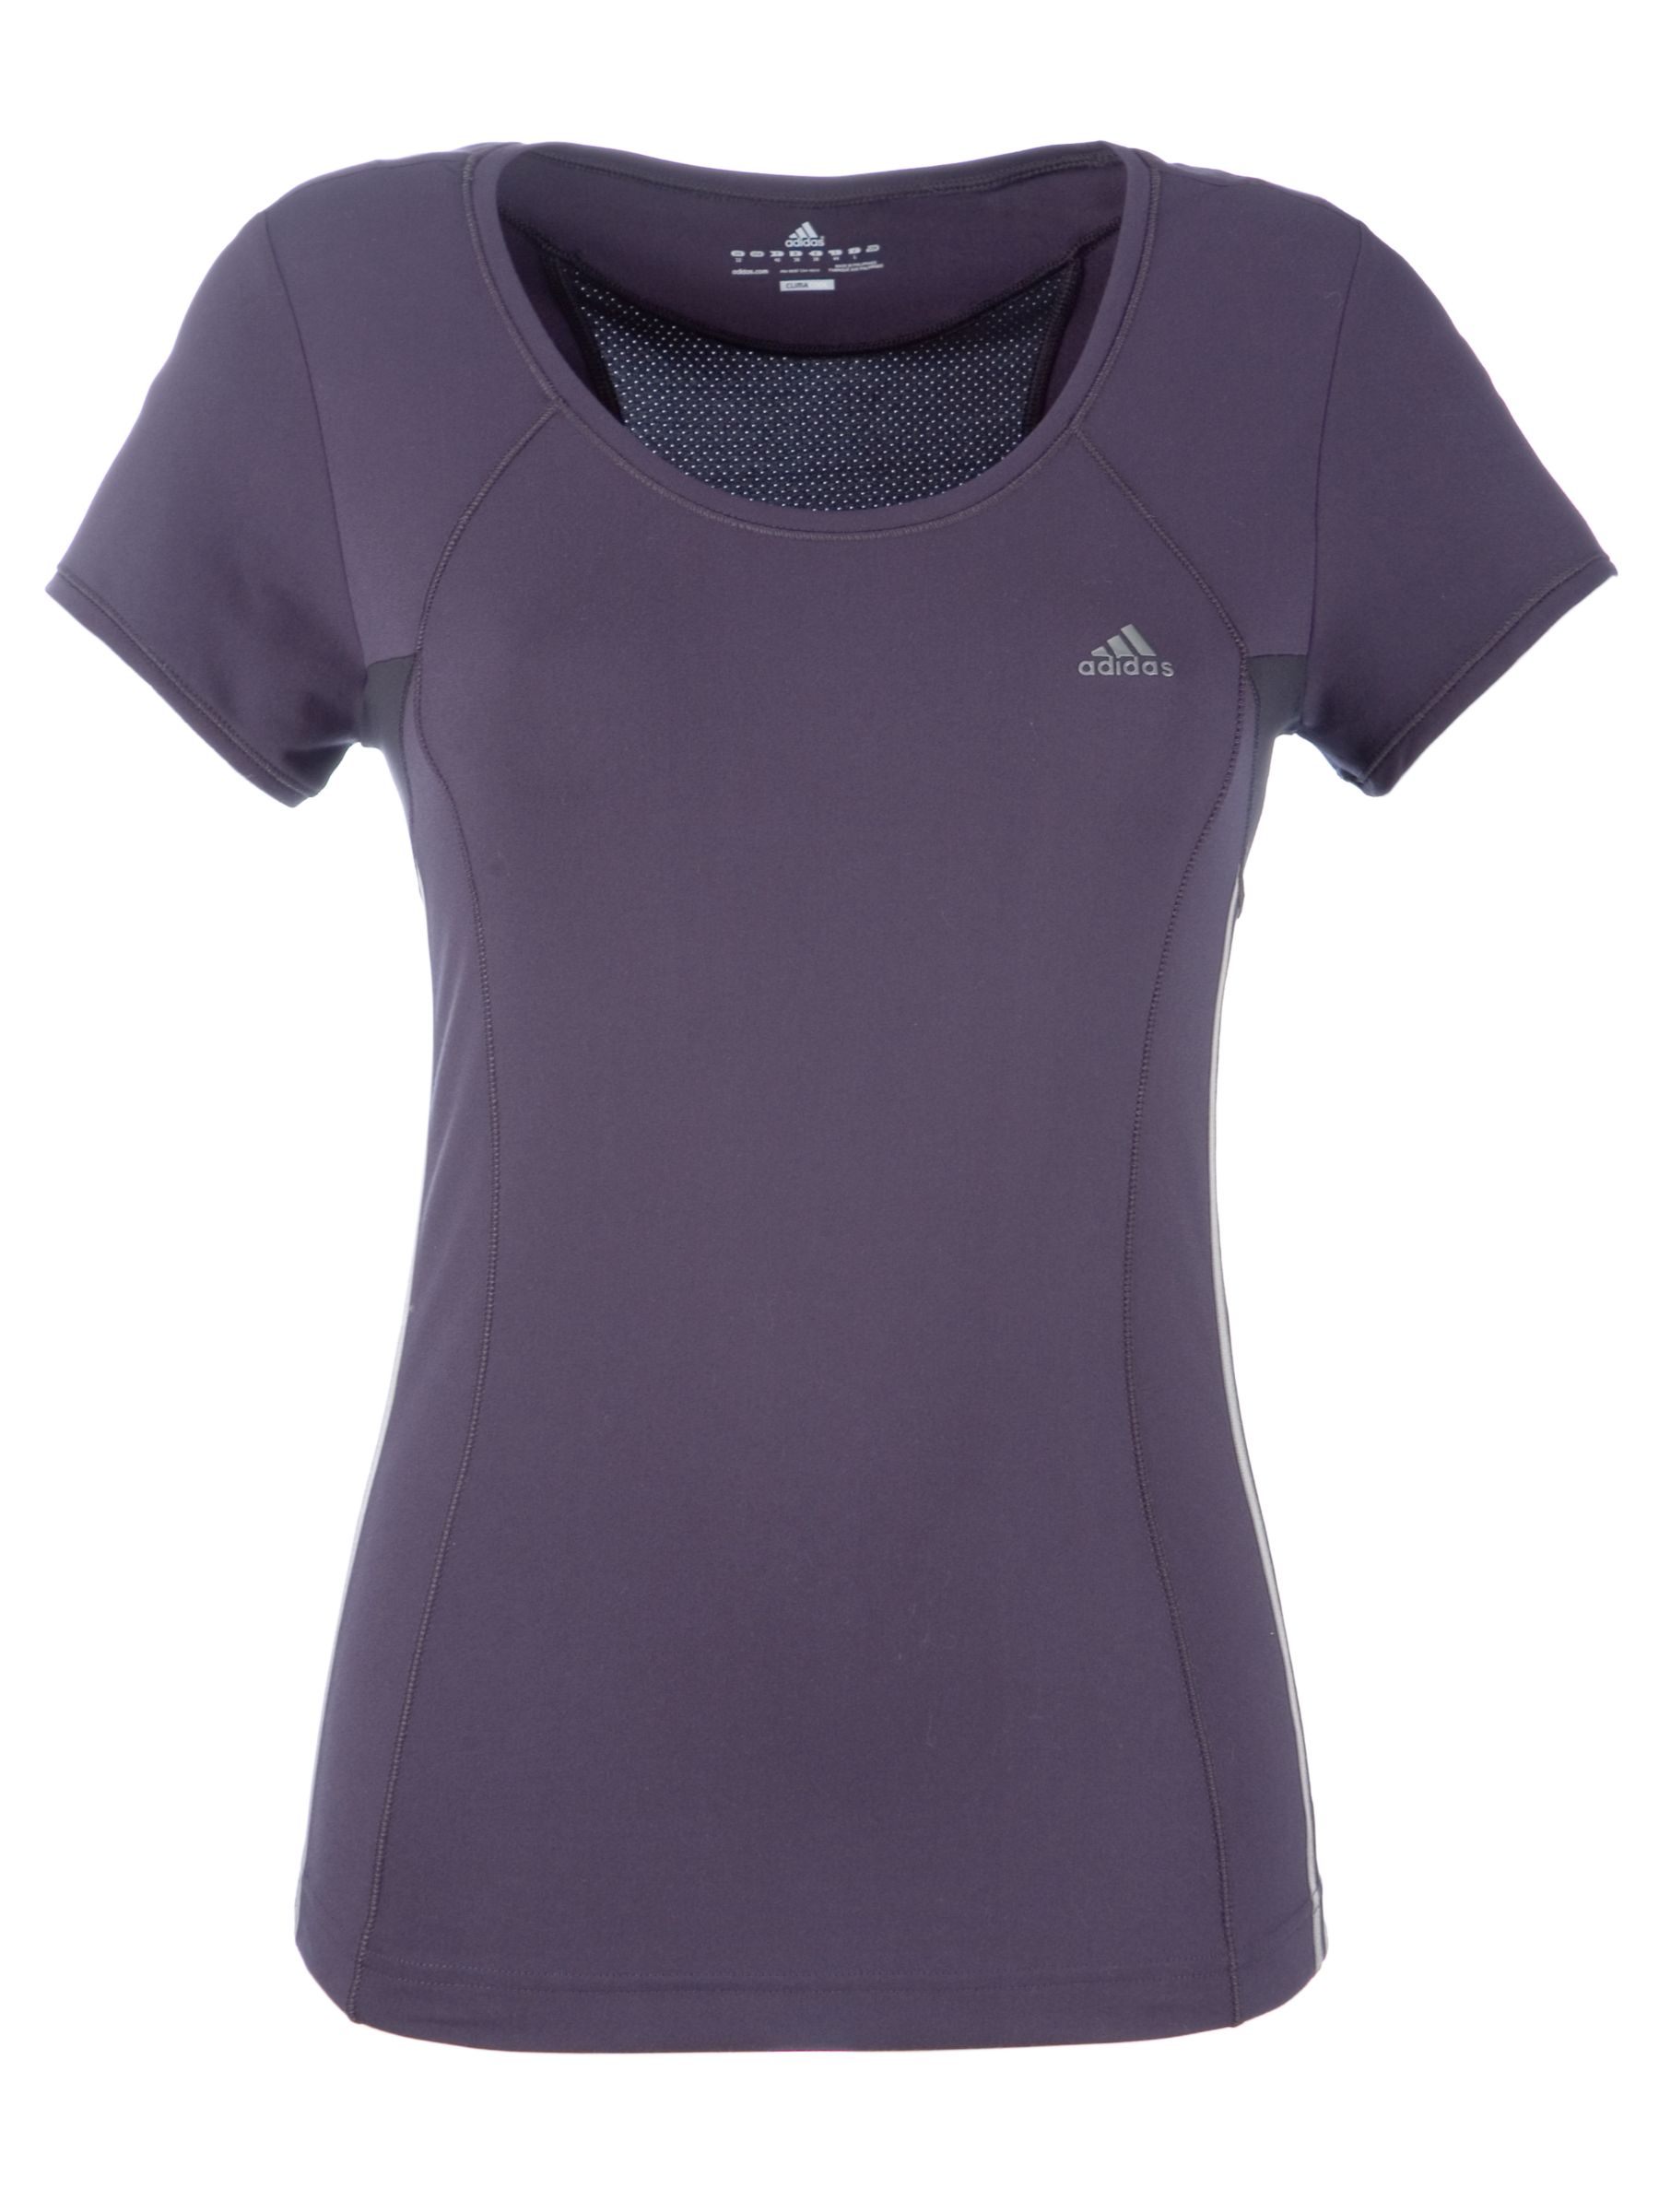 Adidas Clima Core T-Shirt, Grey